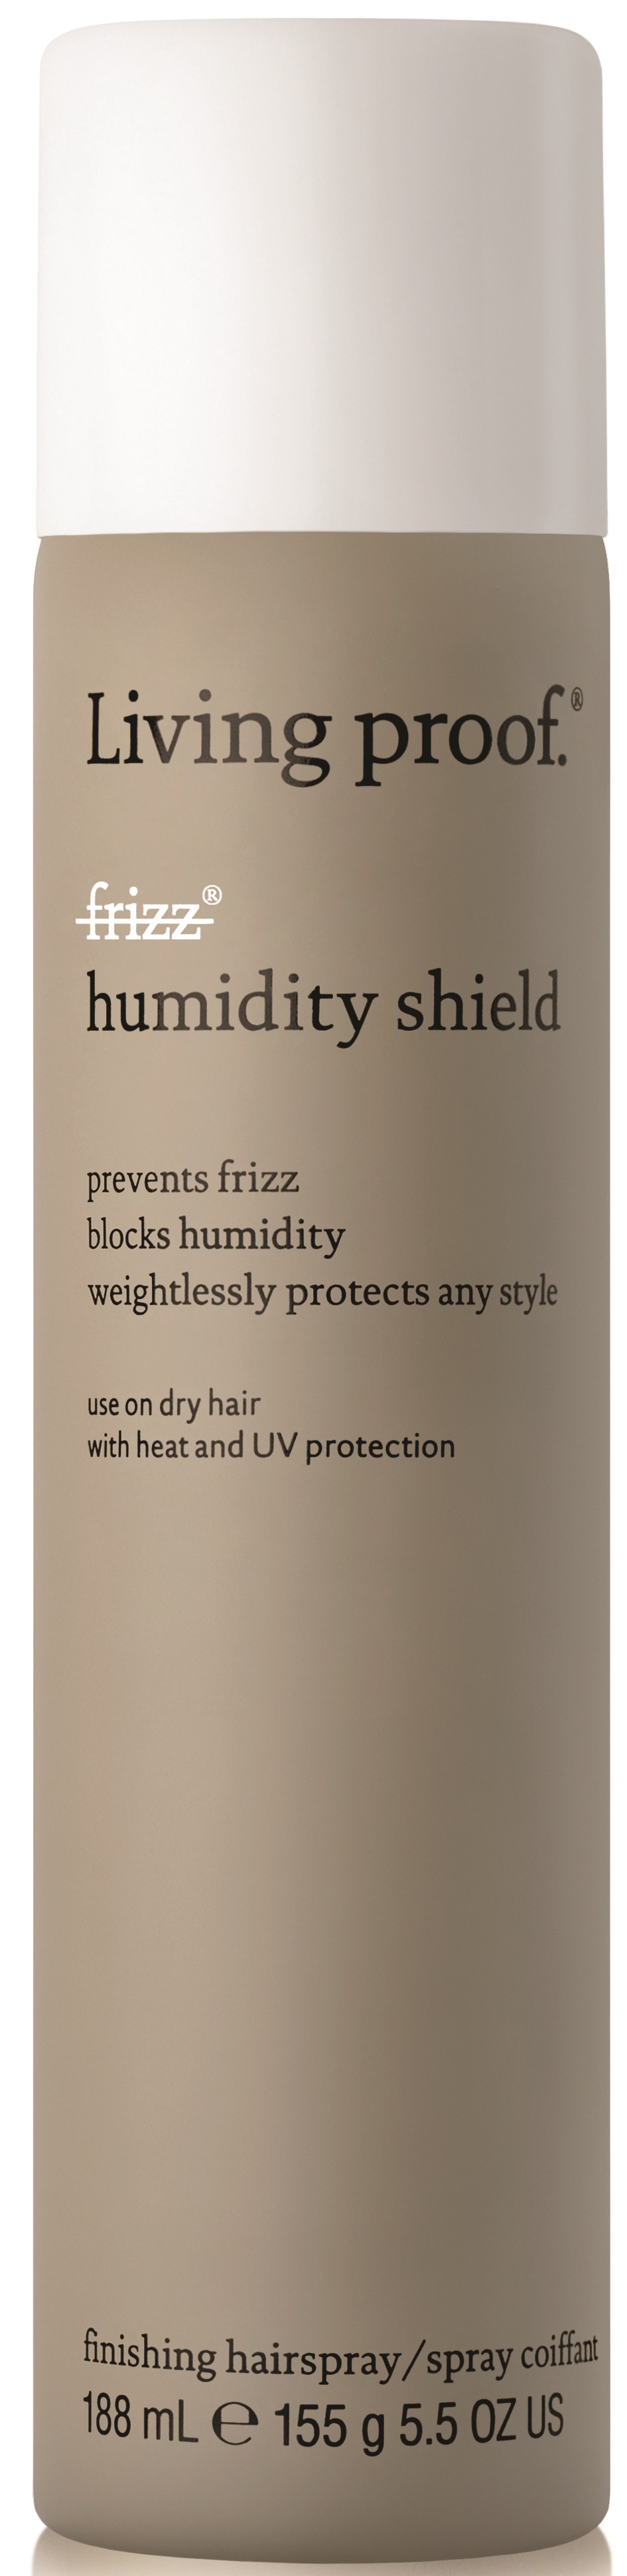 Living Proof No Frizz Humidity Shield 188ml